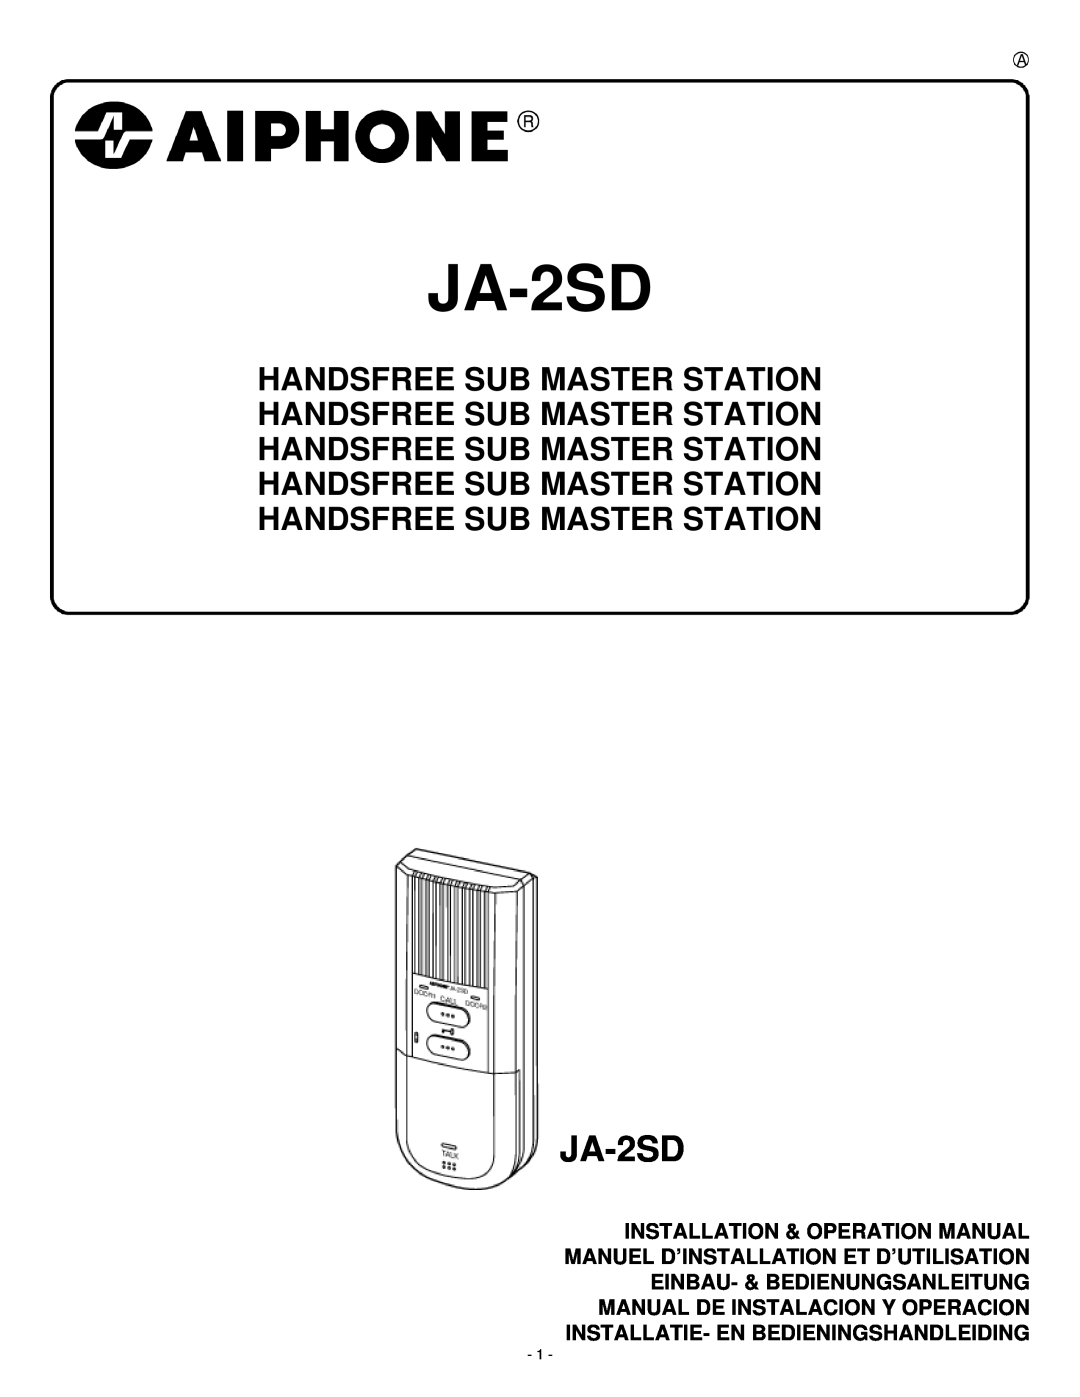 Aiphone ja-2sd operation manual Handsfree Sub Master Station Handsfree Sub Master Station, JA-2SD 